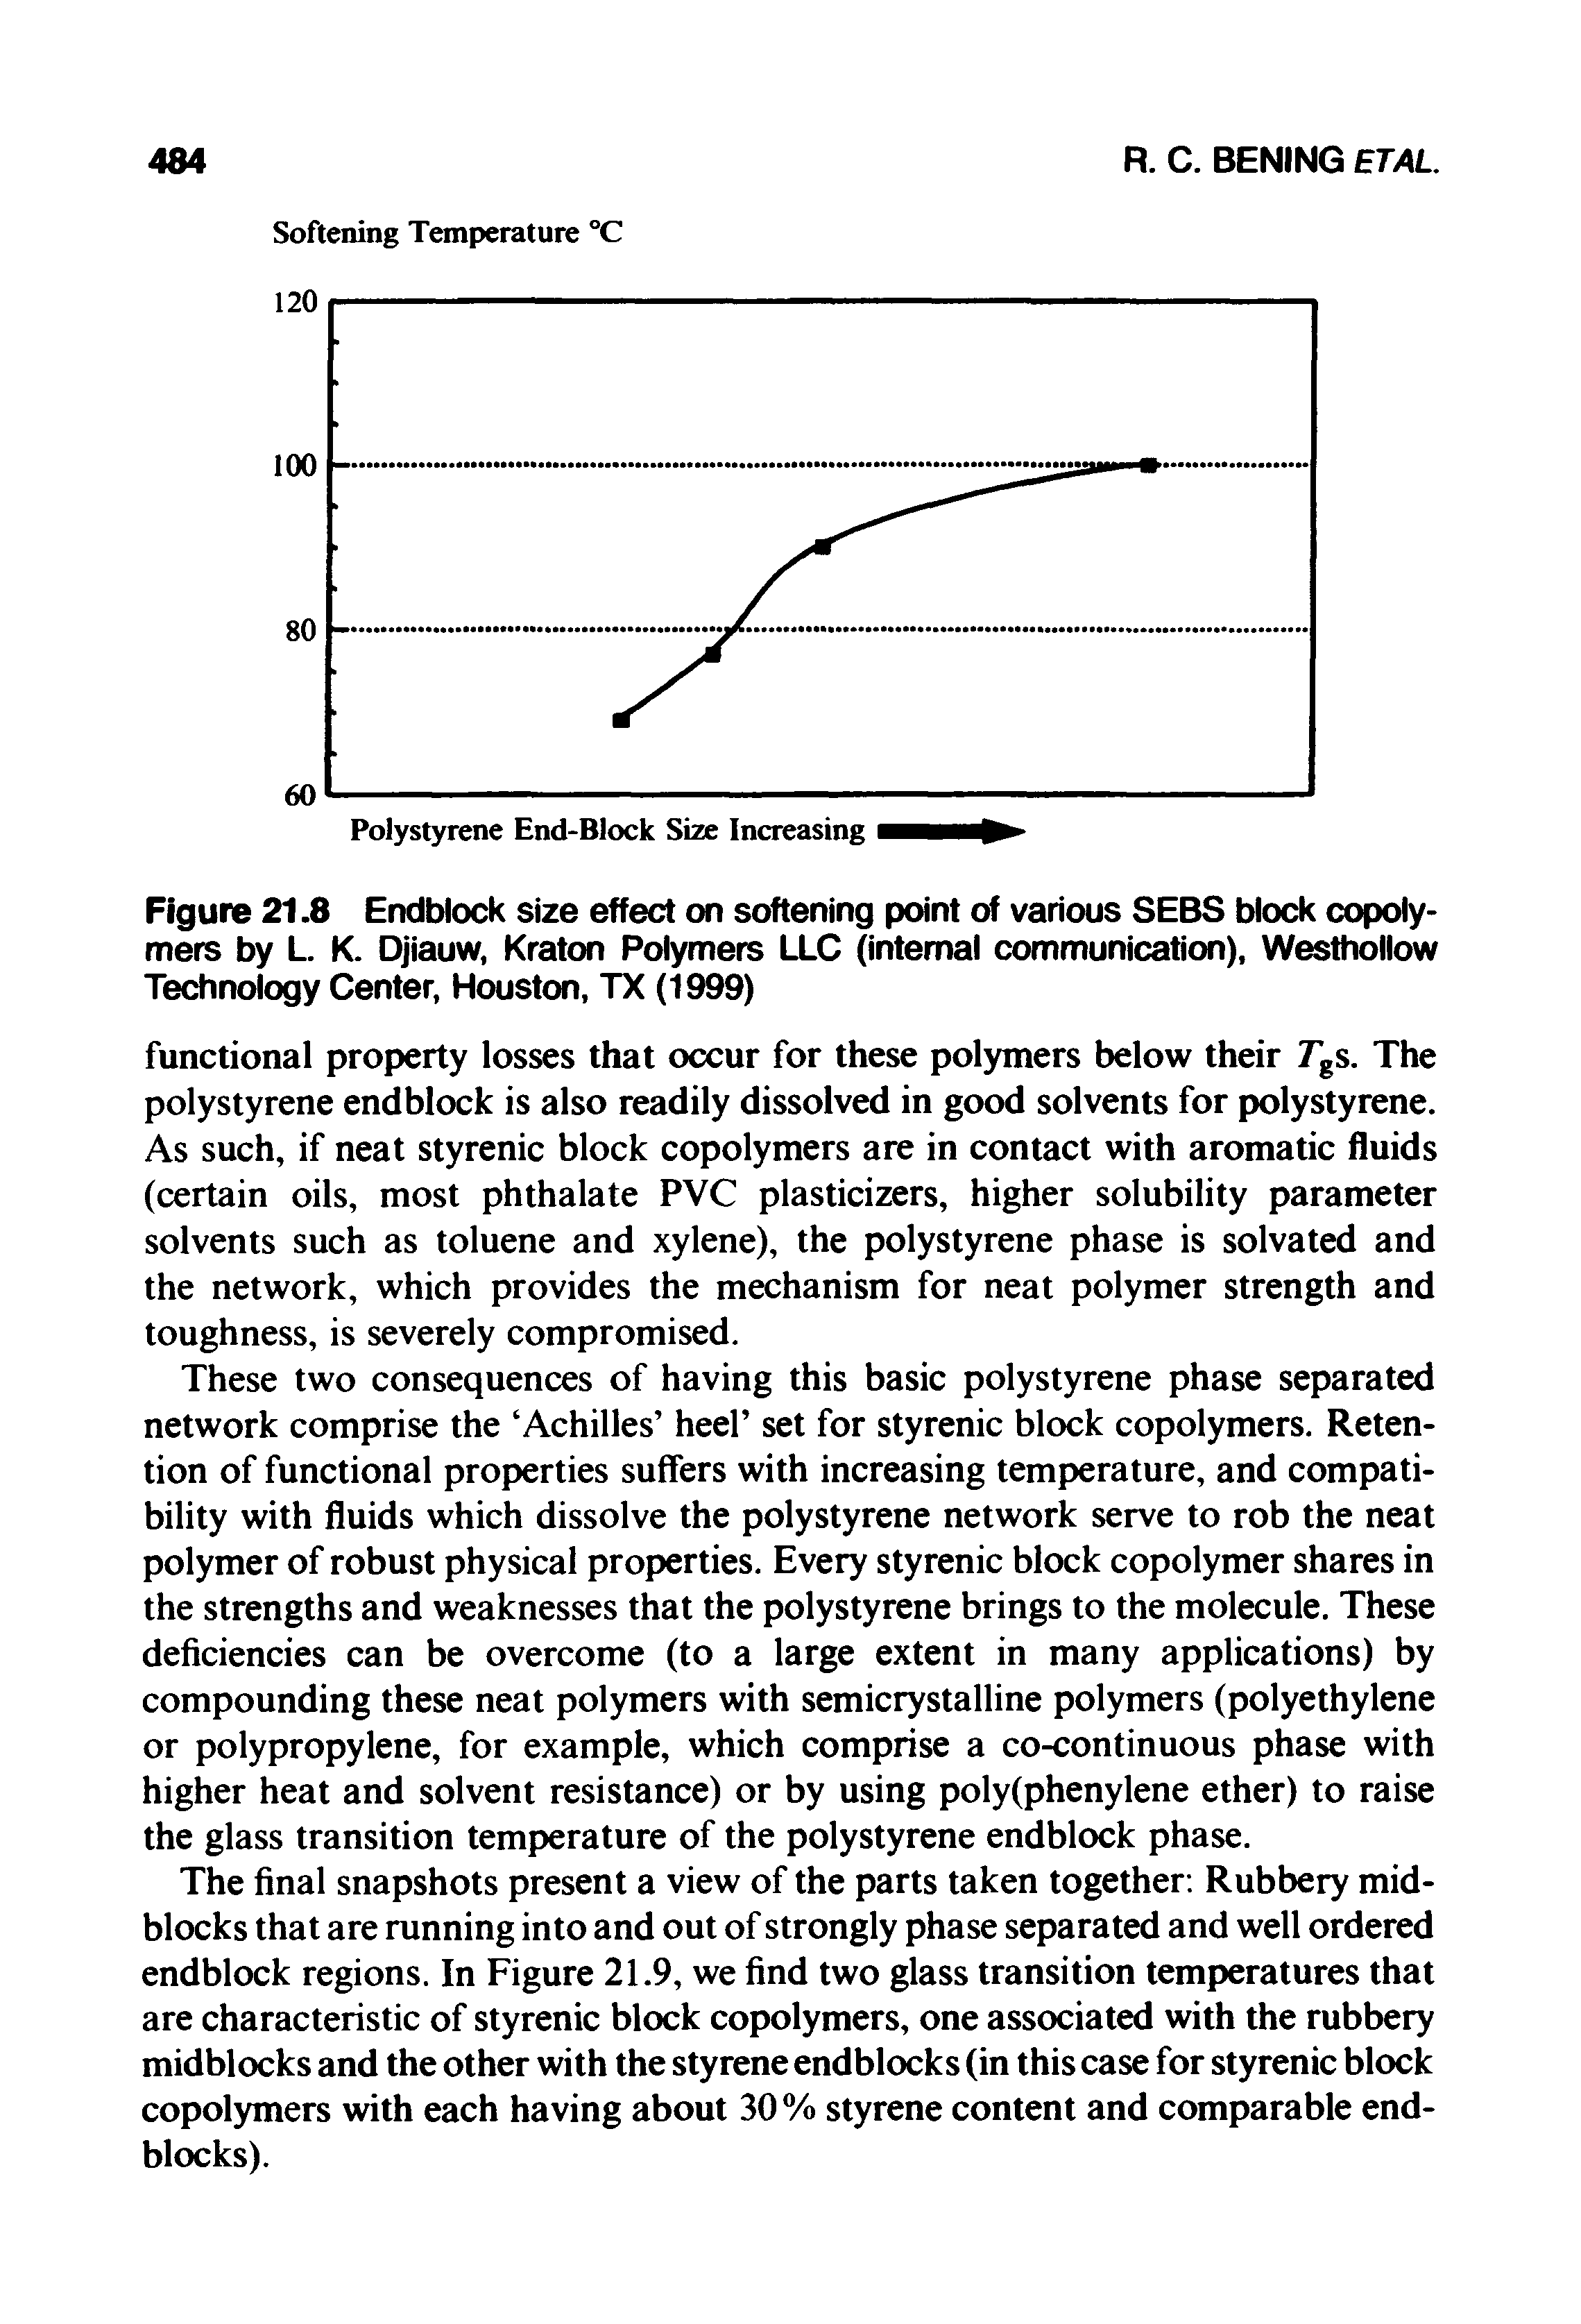 Figure 21.8 Endblock size effect on softening point of various SEBS block copolymers by L. K. Djiauw, Kraton Polymers LLC (internal communication), Westhollow Technology Center, Houston, TX (1999)...